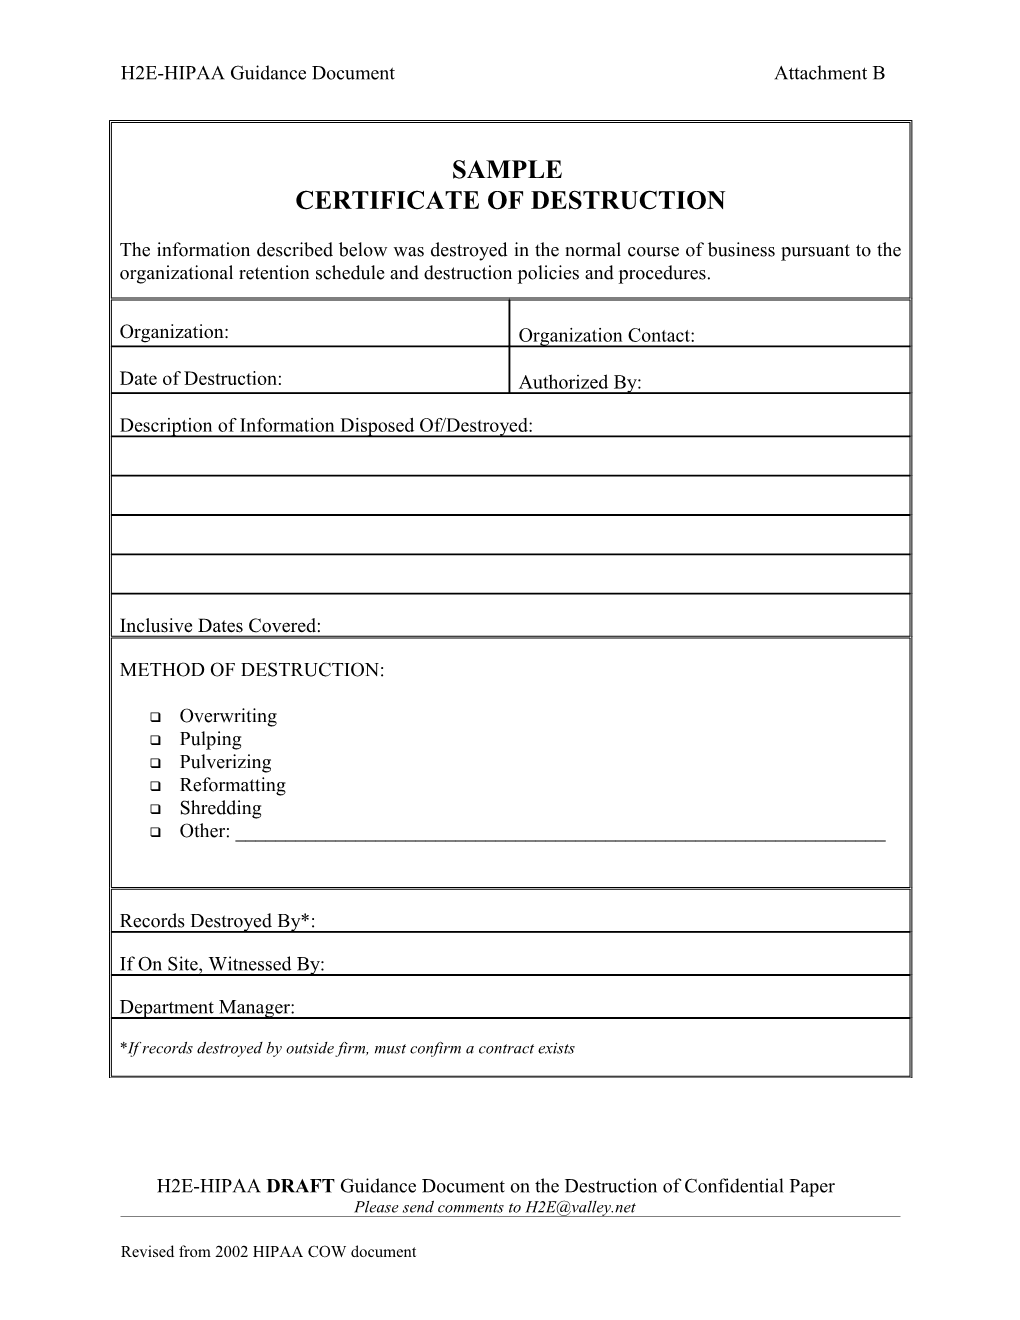 H2E HIPAA Guidance Document: Attachment B - Sample Certificate of Destruction